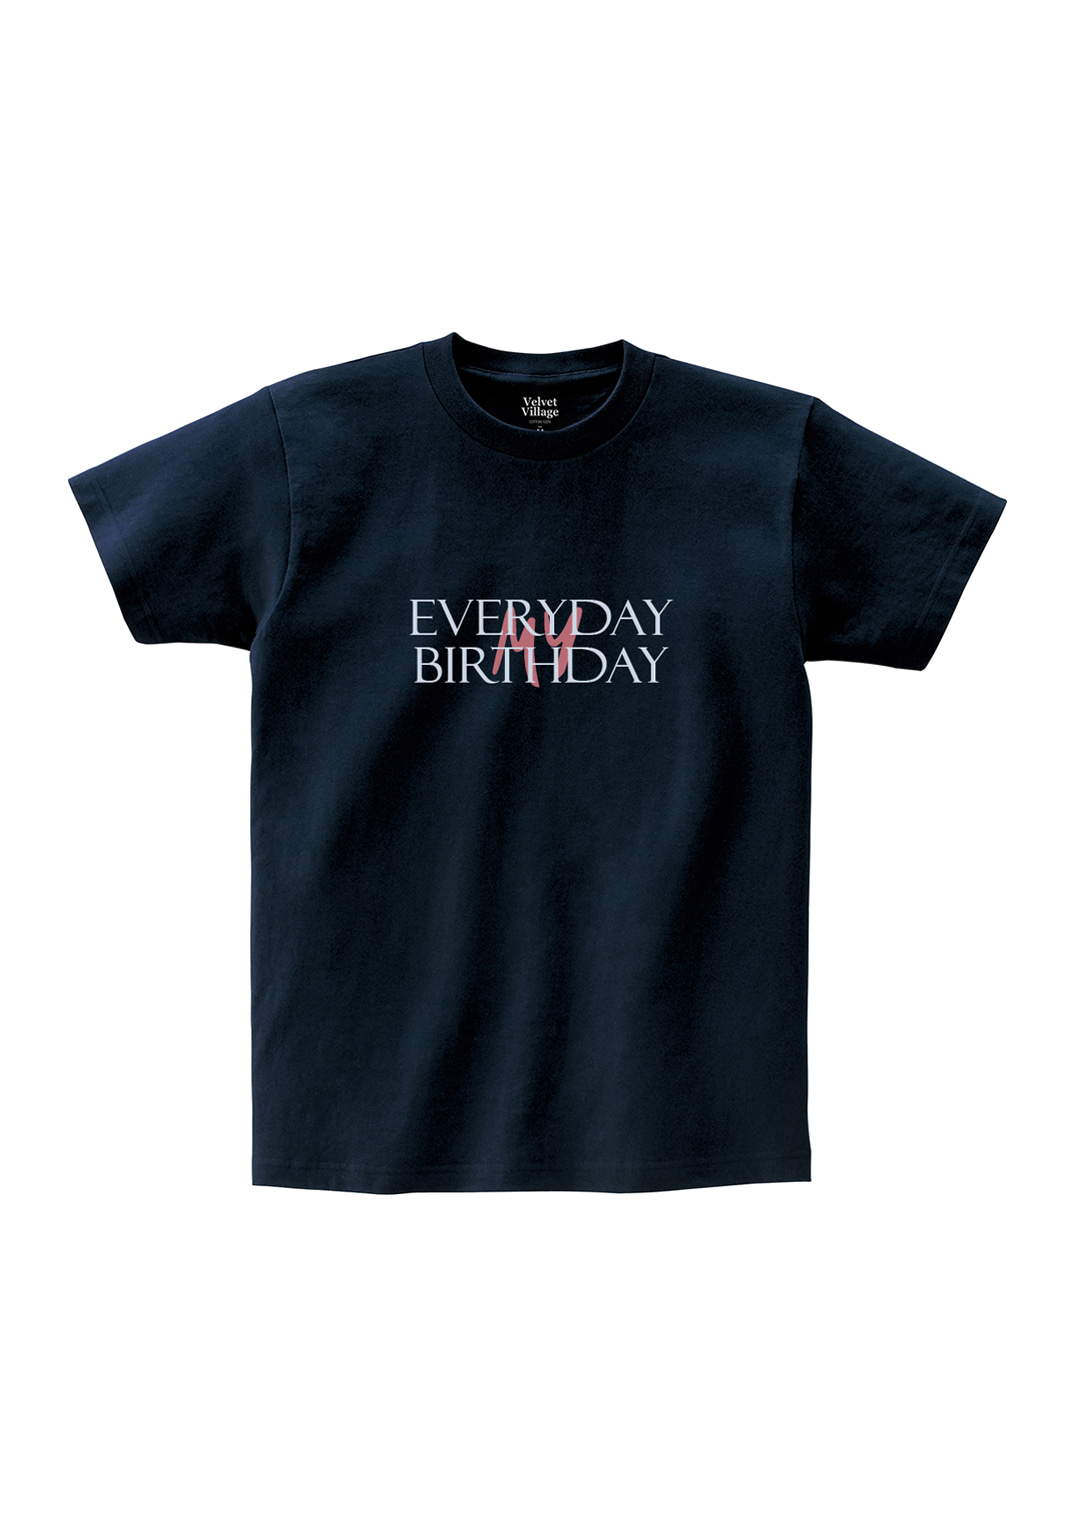 Everyday T-shirt (Navy)